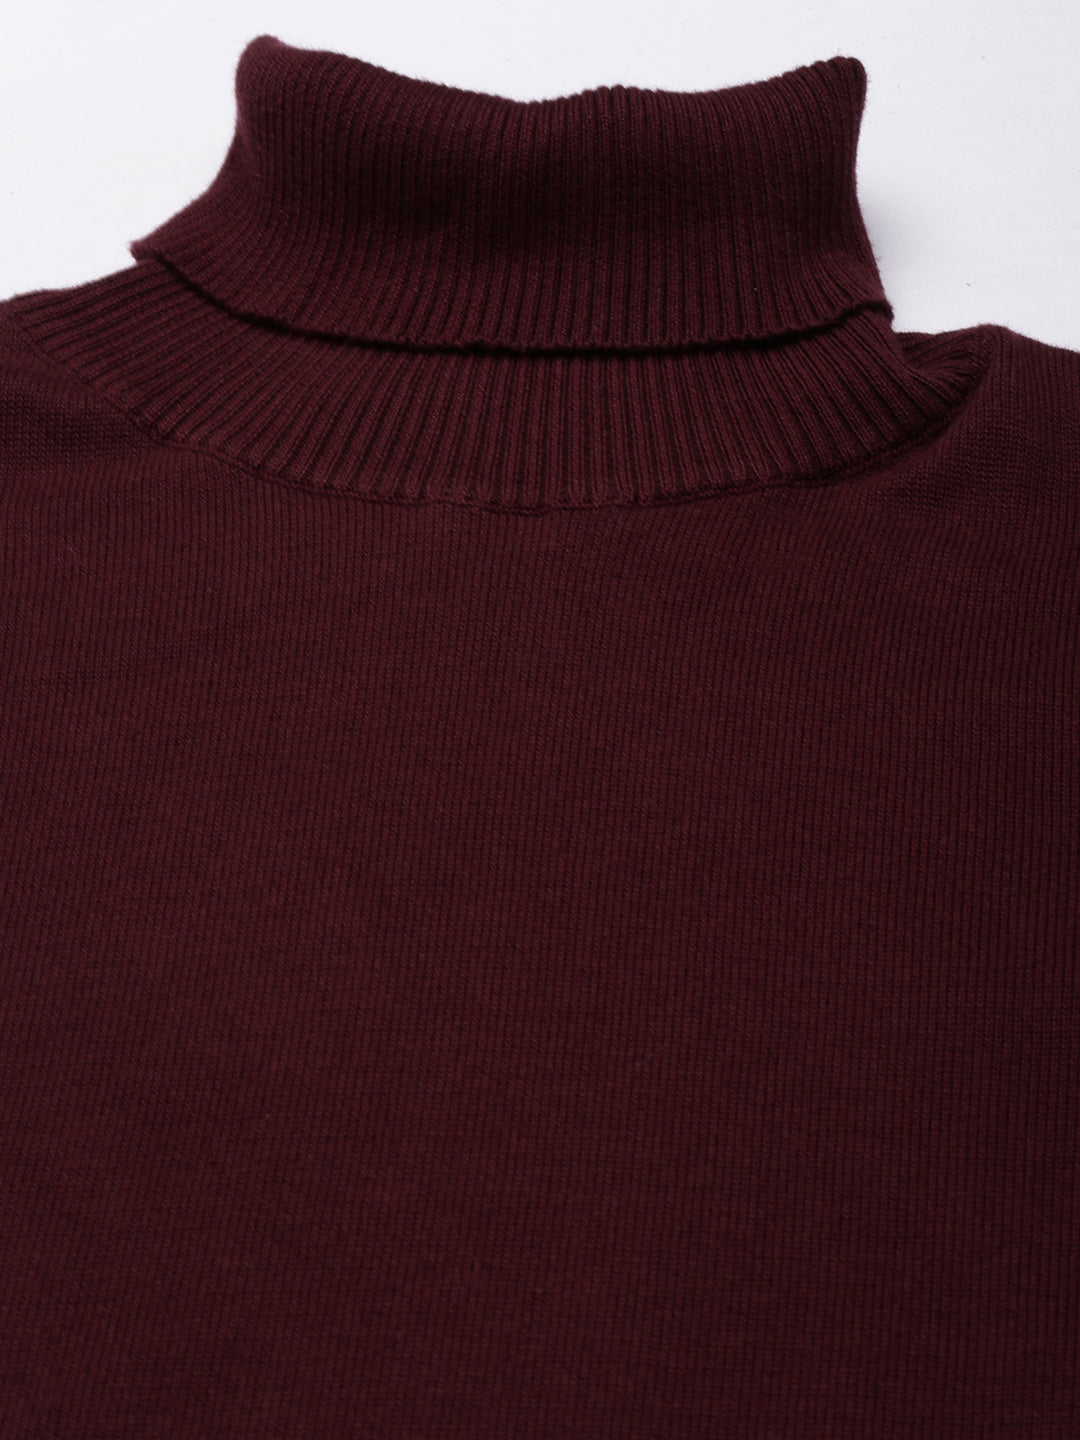 Deep Maroon Turtleneck Sweater